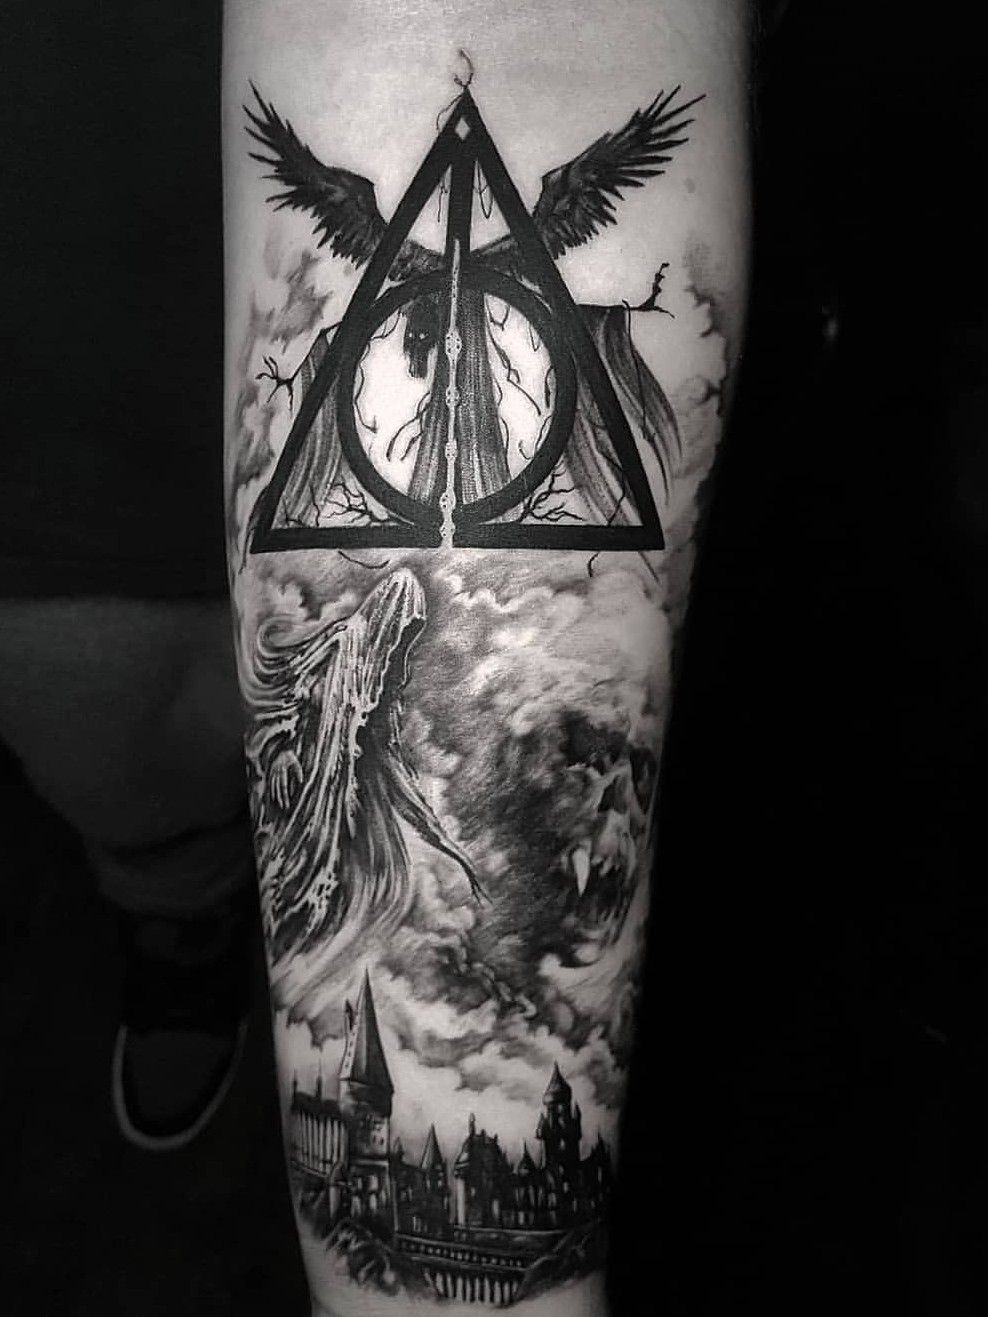 Dementor tattoo by Sierah Skye at Certified Tattoo Studios Denver CO  r tattoos